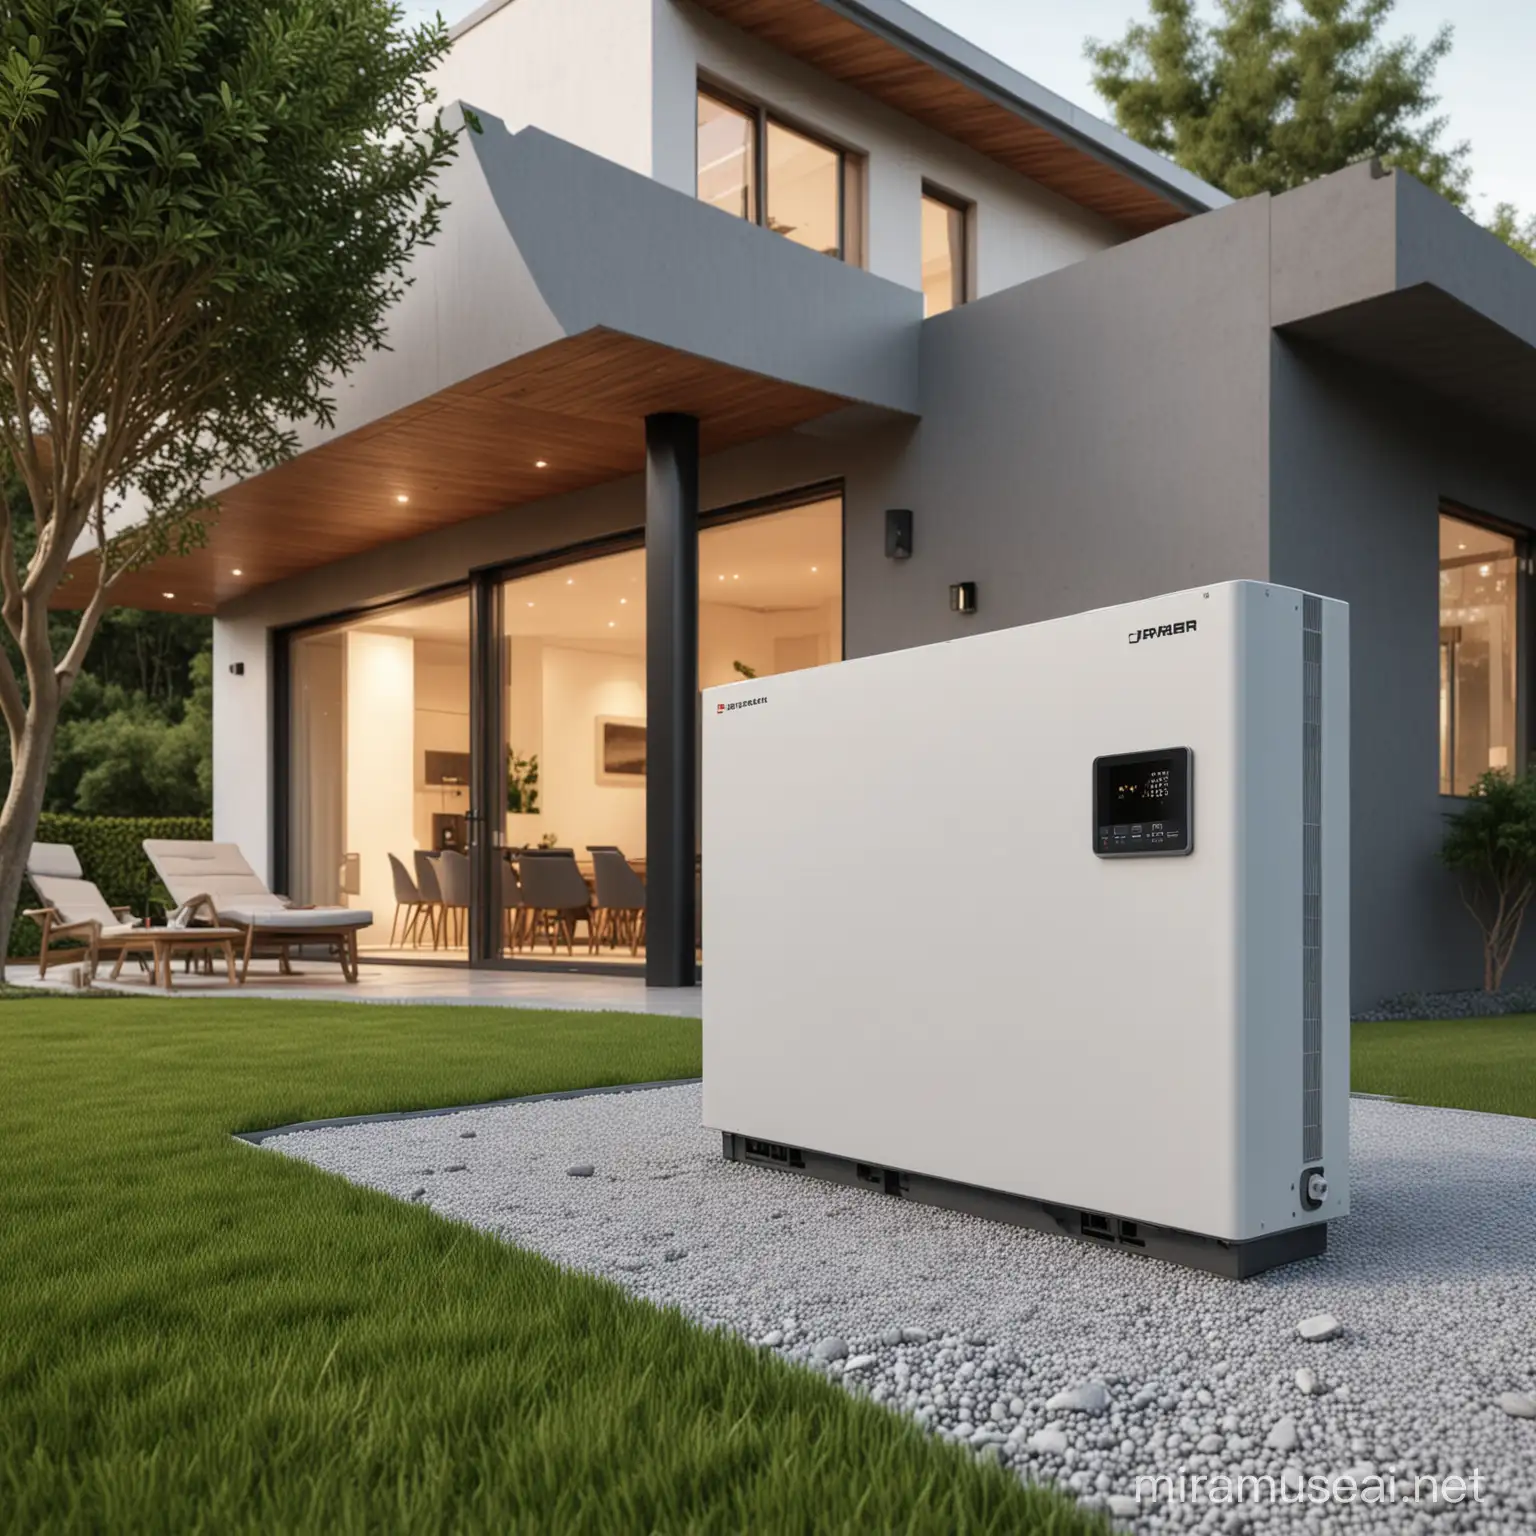 3D inverter battery at the backyard of a modern house
